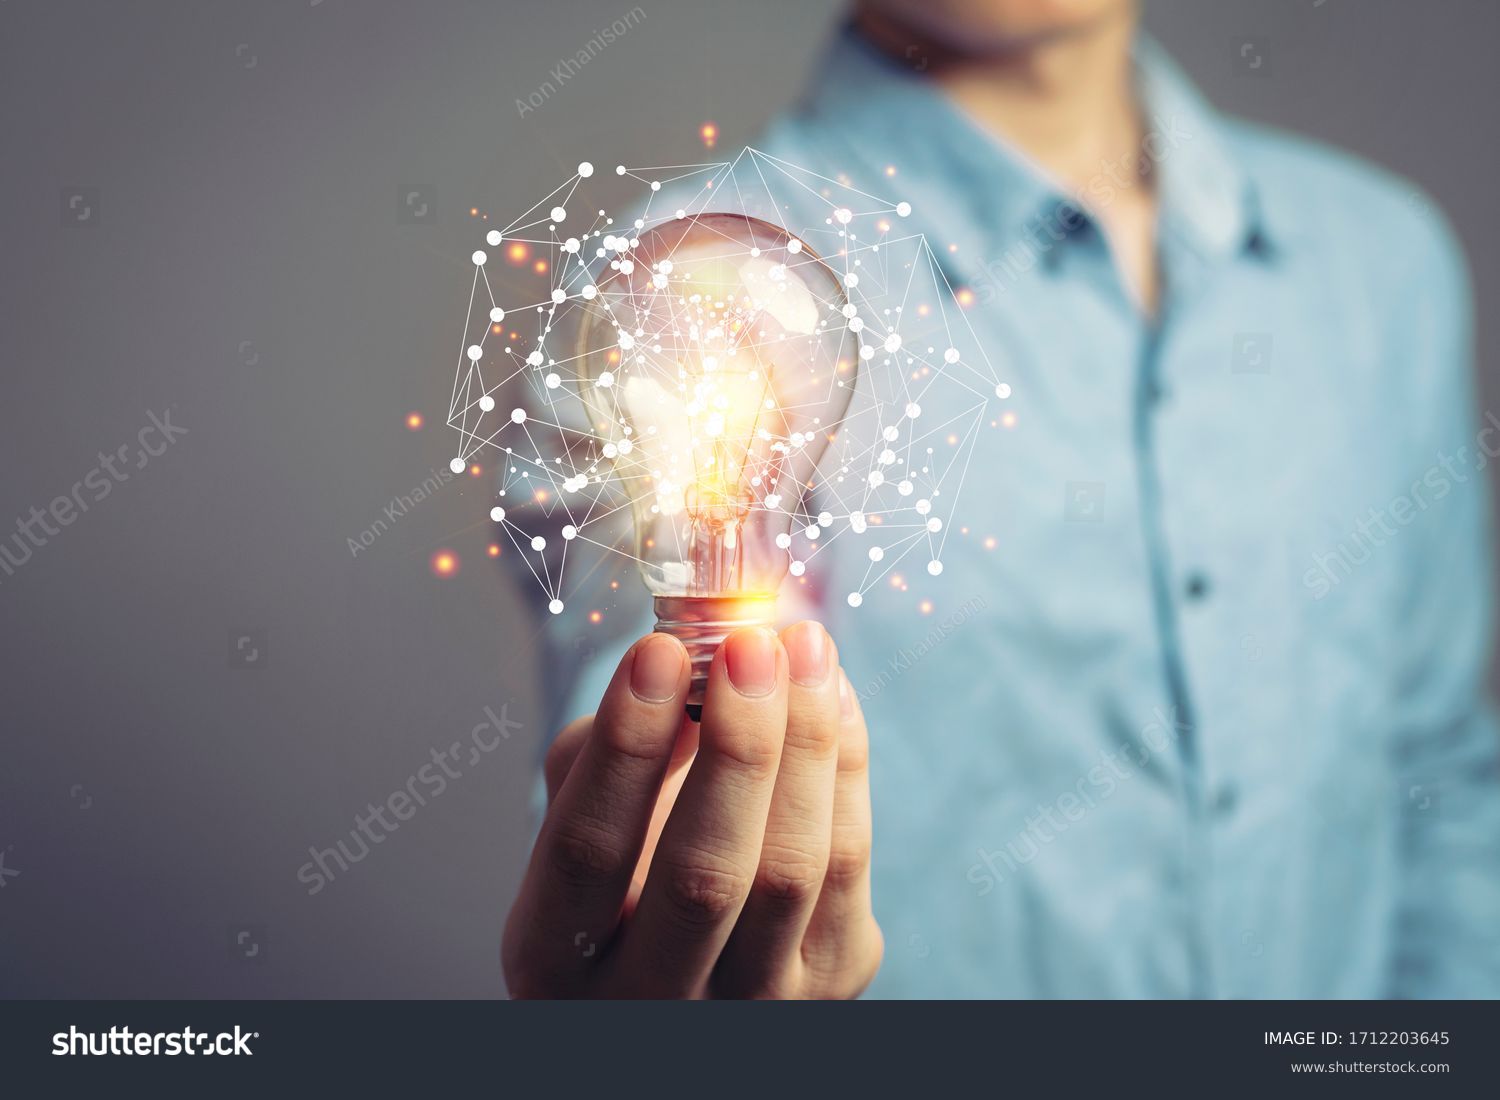 Man holding light bulbs, ideas of new ideas with innovative technology and creativity. concept creativity with bulbs that shine glitter. #1712203645